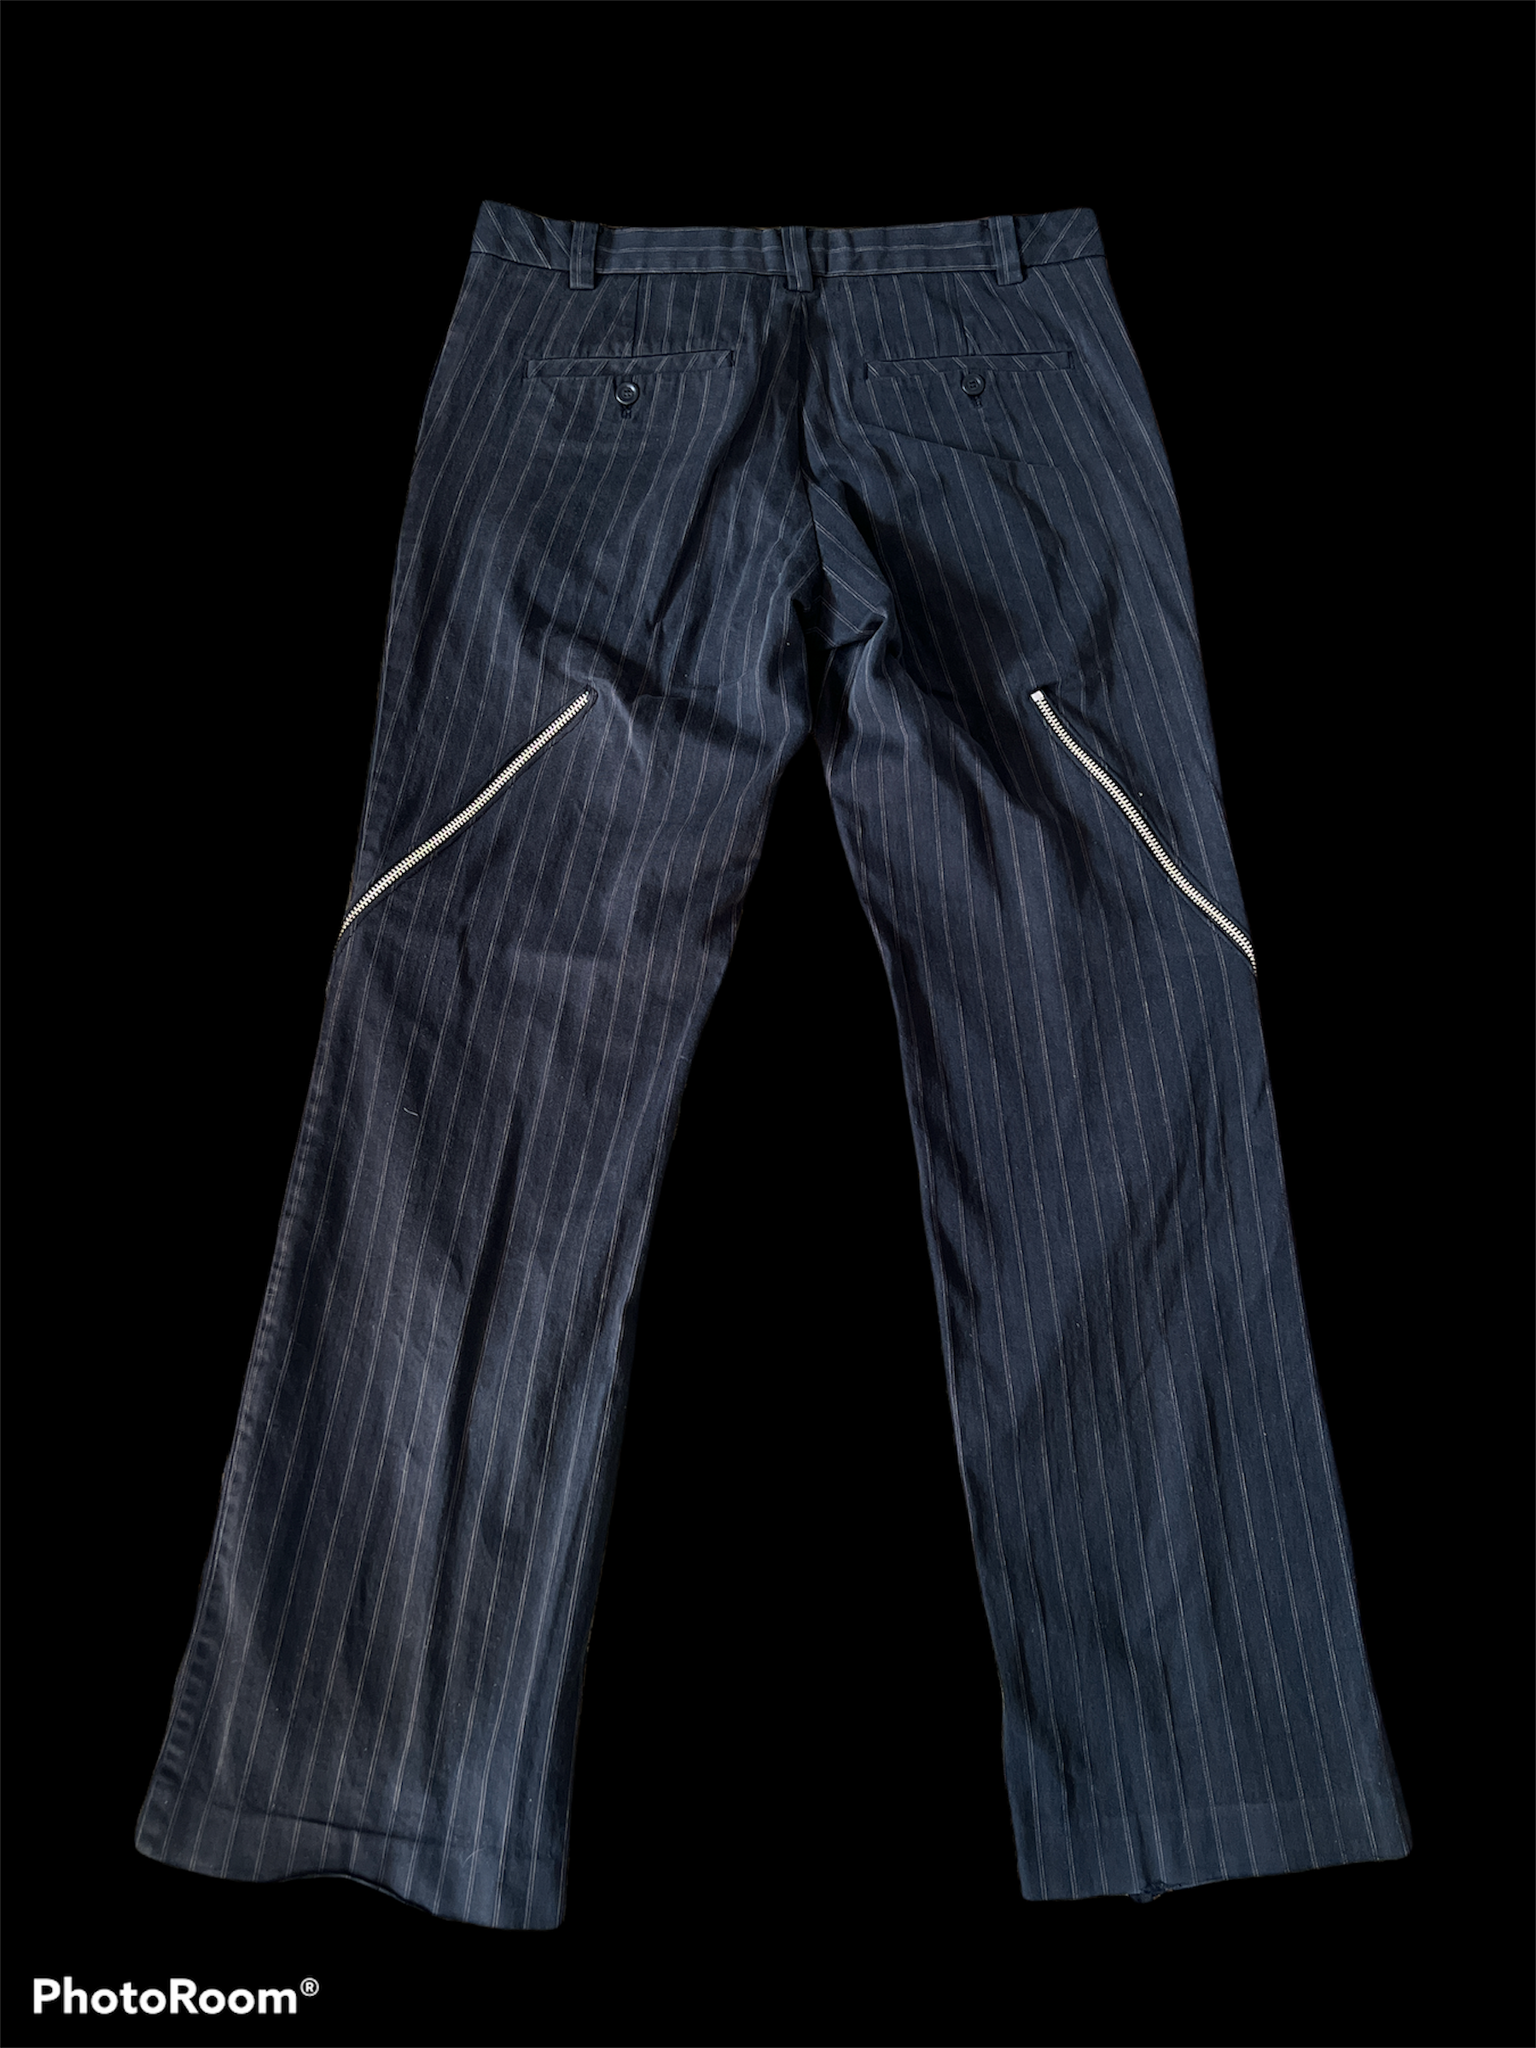 wraparound pants